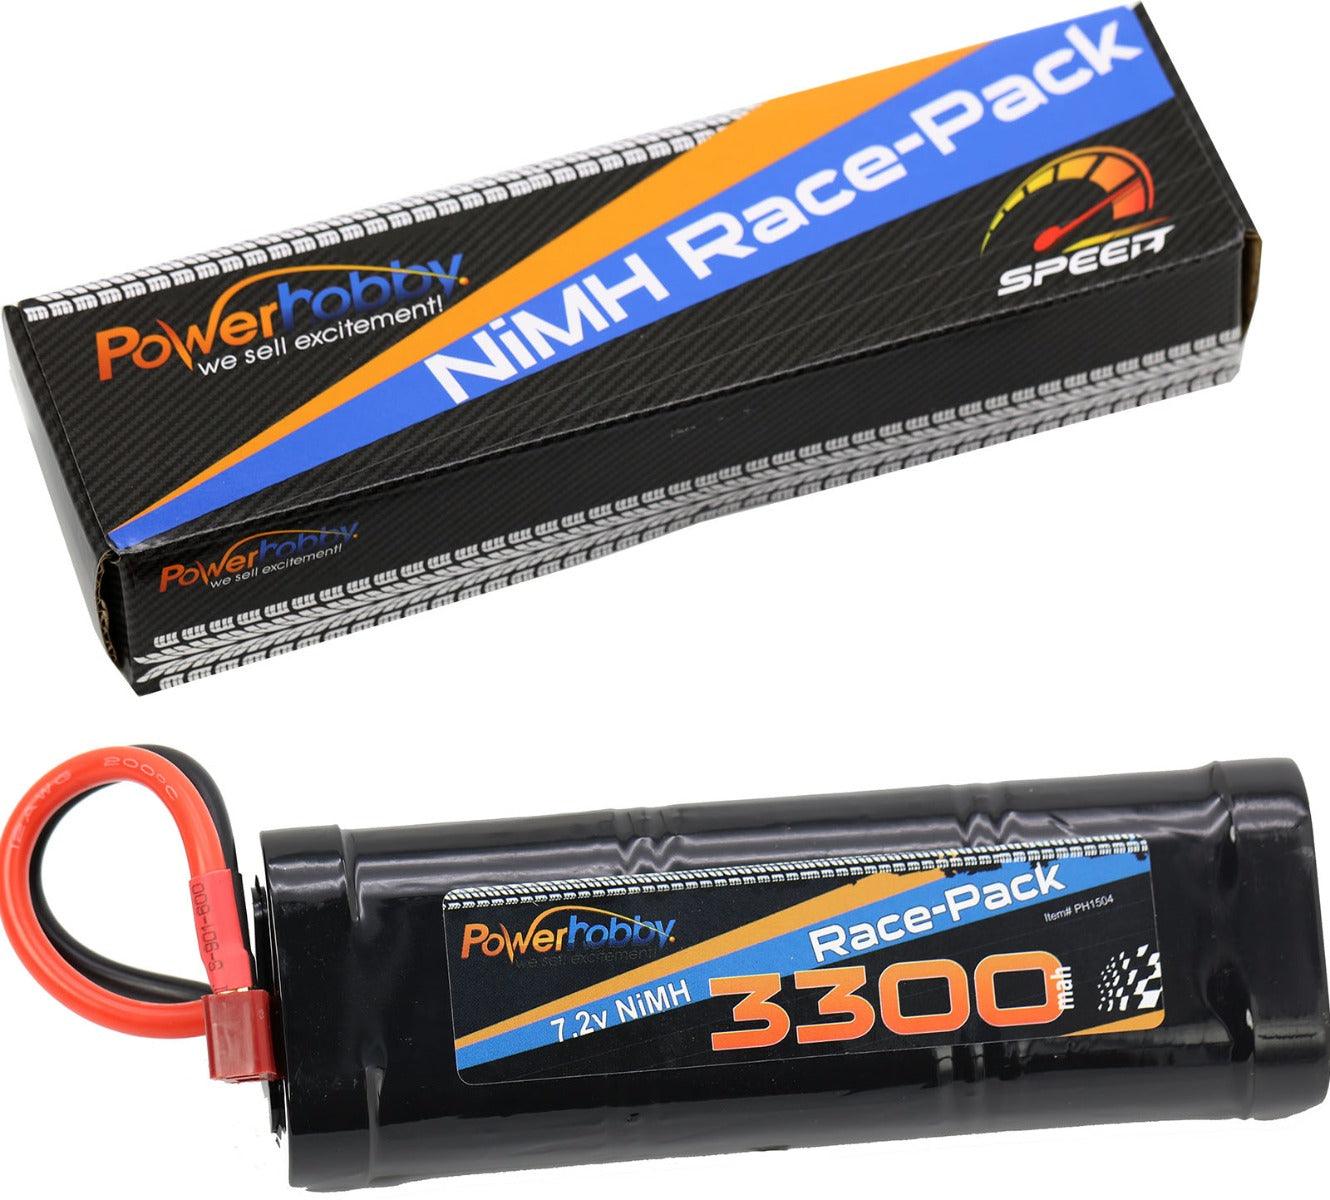 Powerhobby 7.2V 6-Cell 3300mah Nimh Flat Battery Pack w Deans Plug - PowerHobby